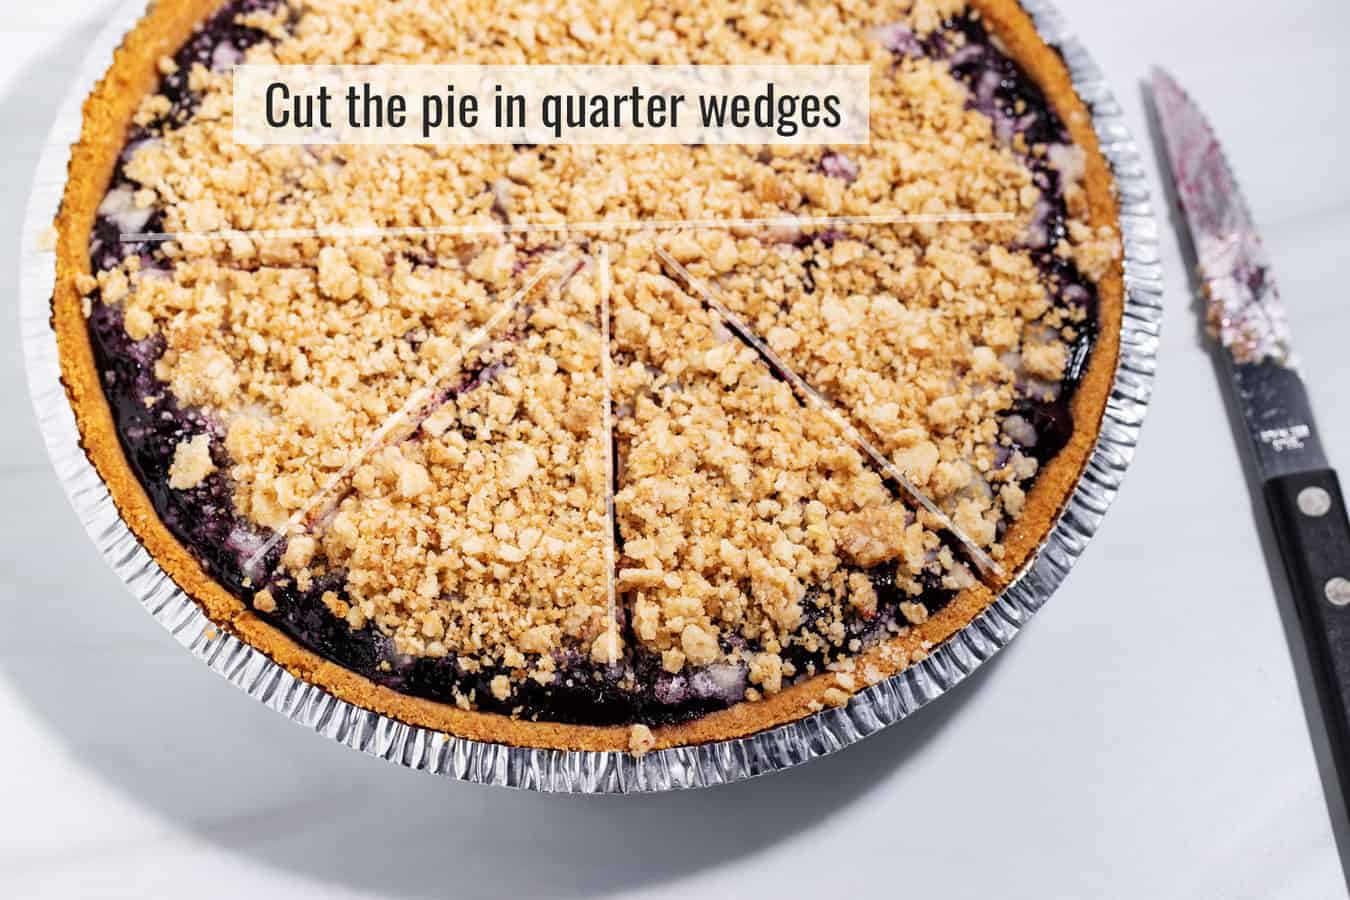 cutting half a pie in quarter wedges